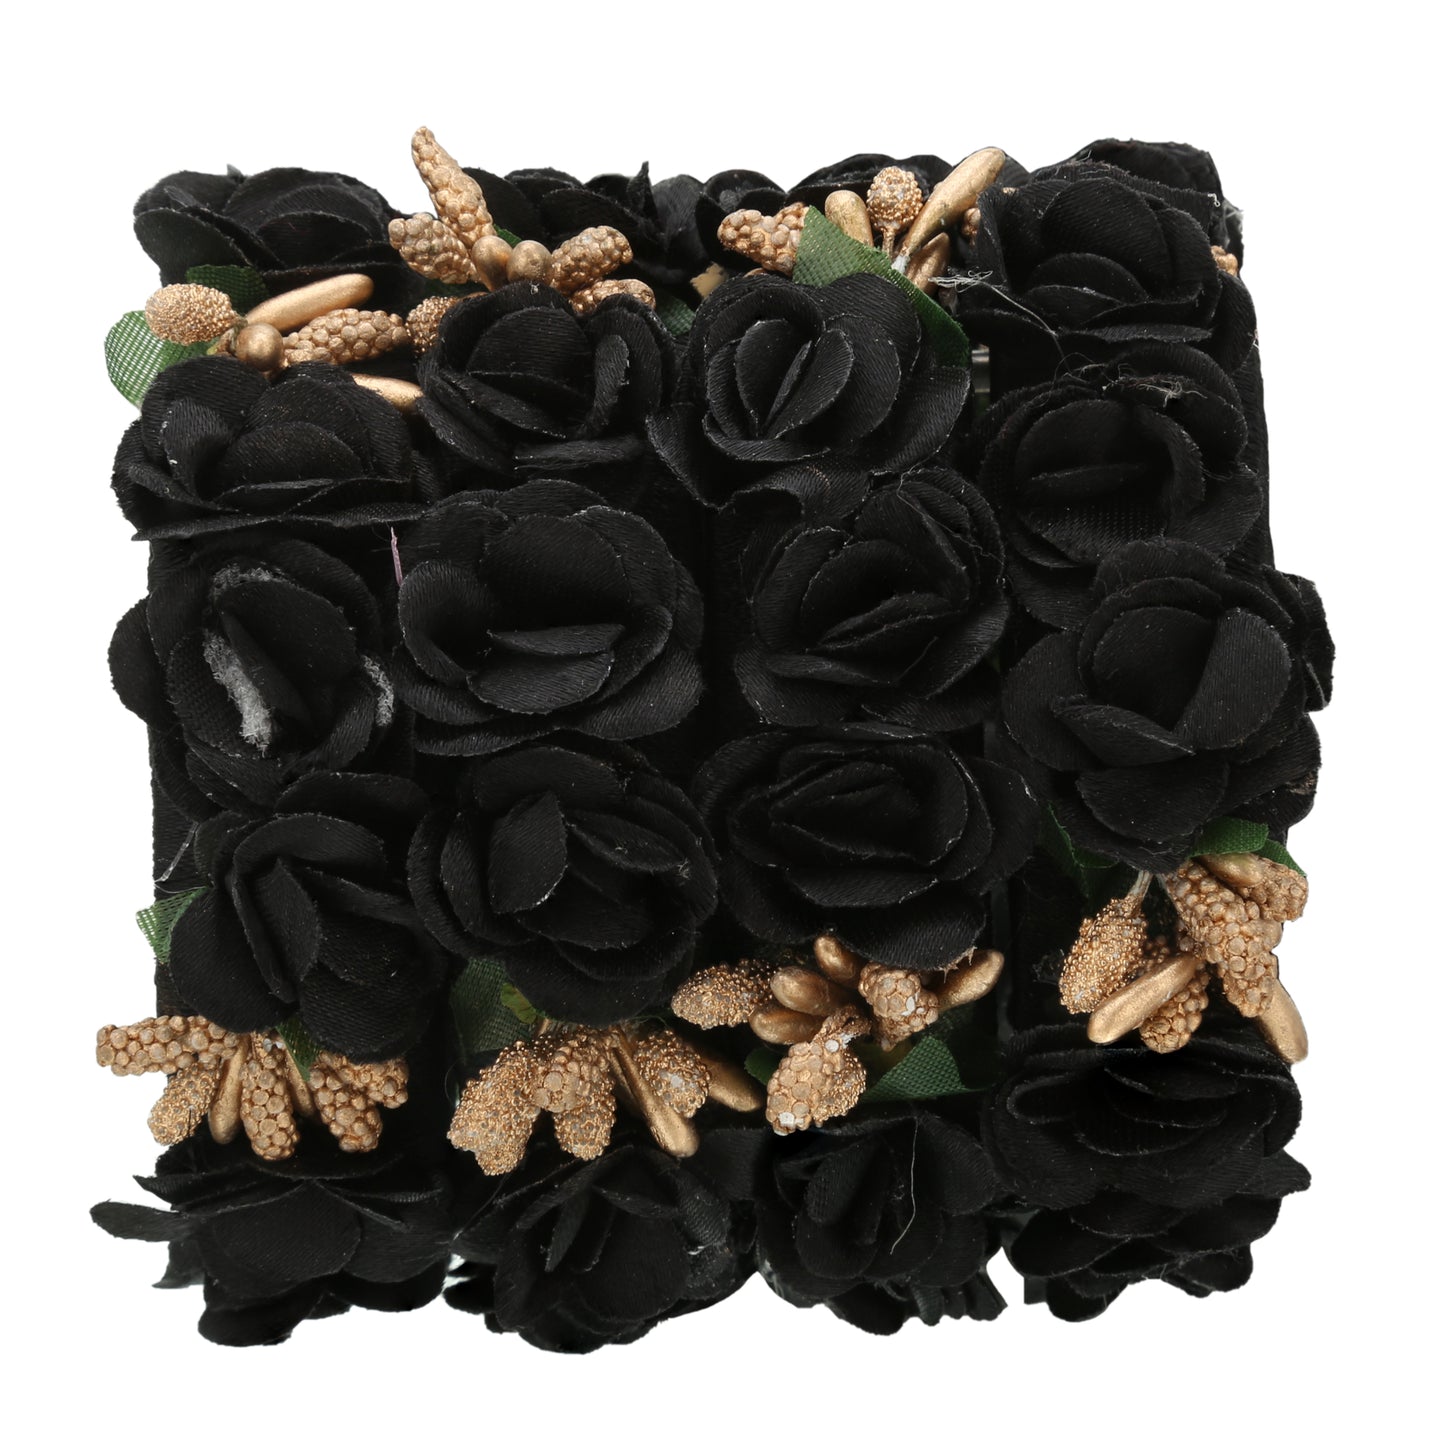 sukriti beautiful handcrafted black flower designer silk thread bridal chuda wedding bangles for women – set of 22